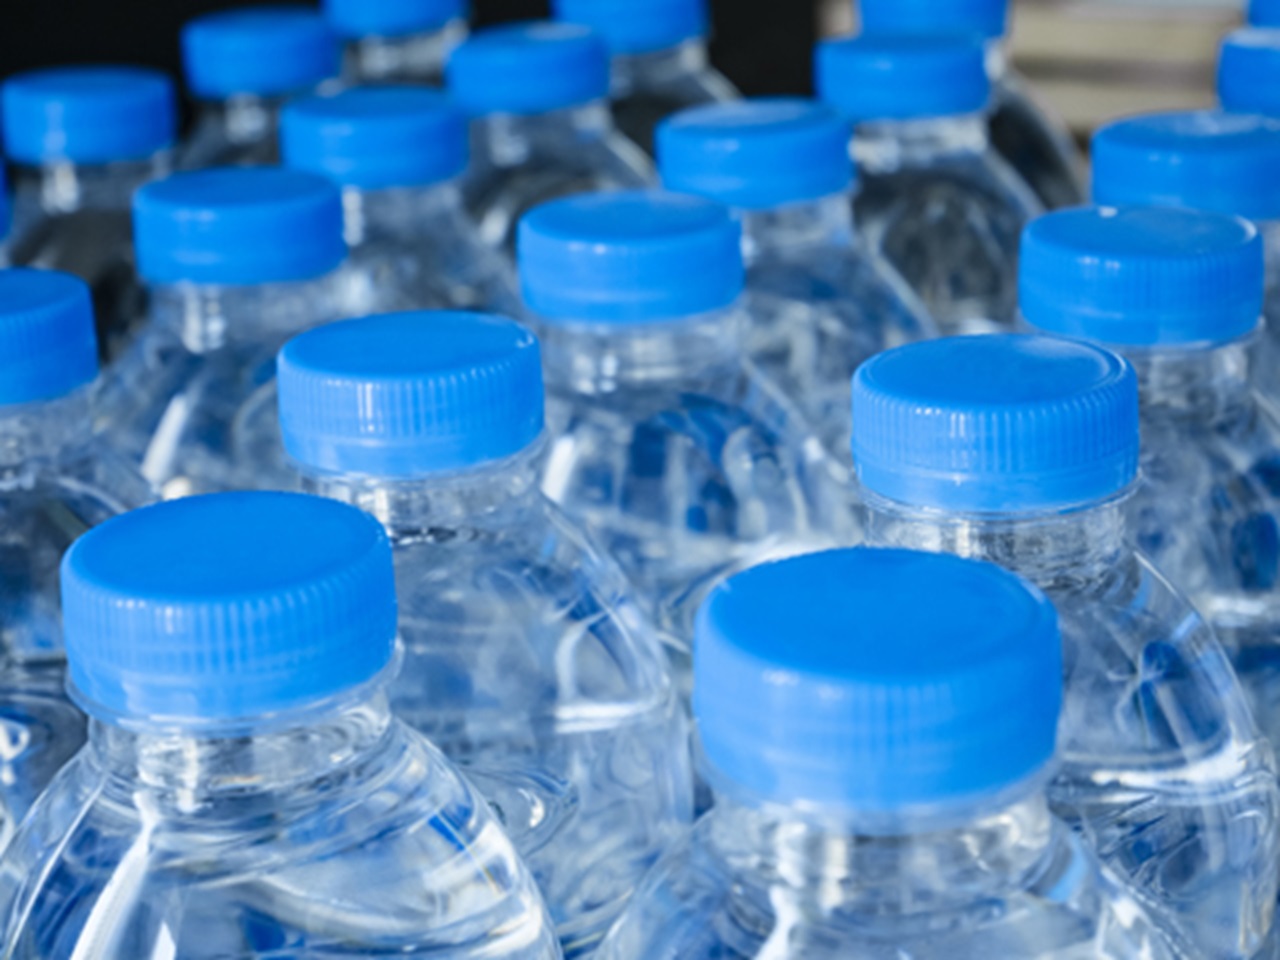 Bottled water bottles for trick-or-treating